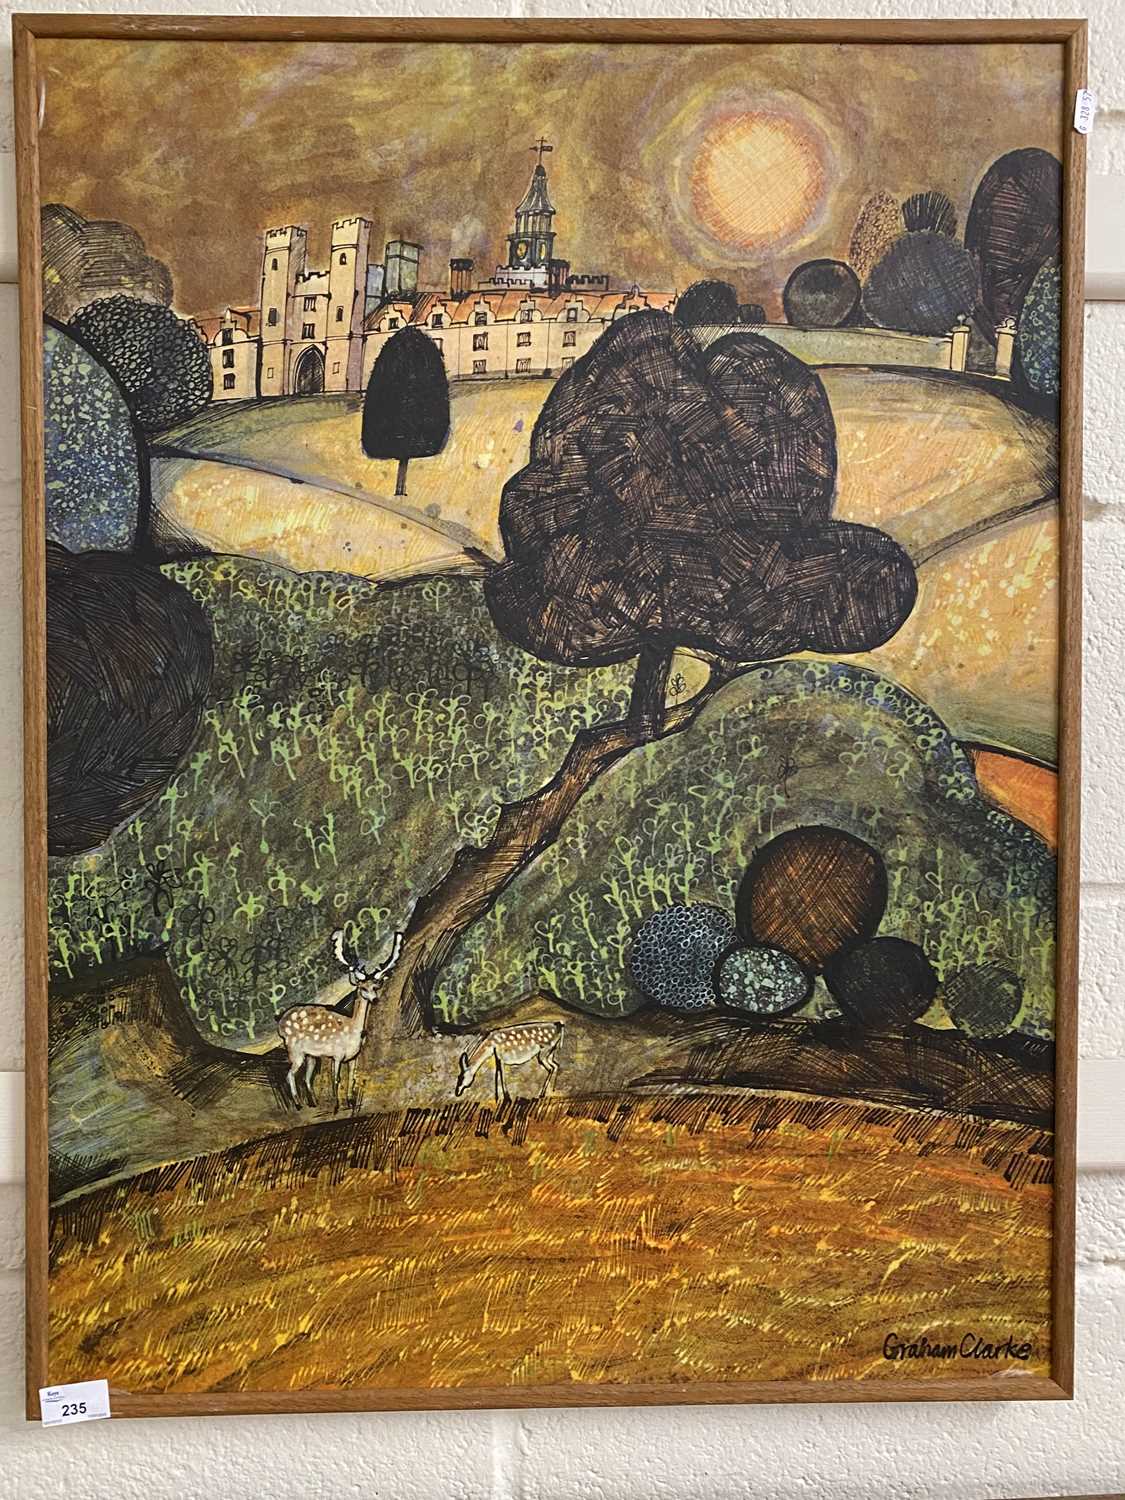 Graham Clarke, coloured print of a park land scene with deer